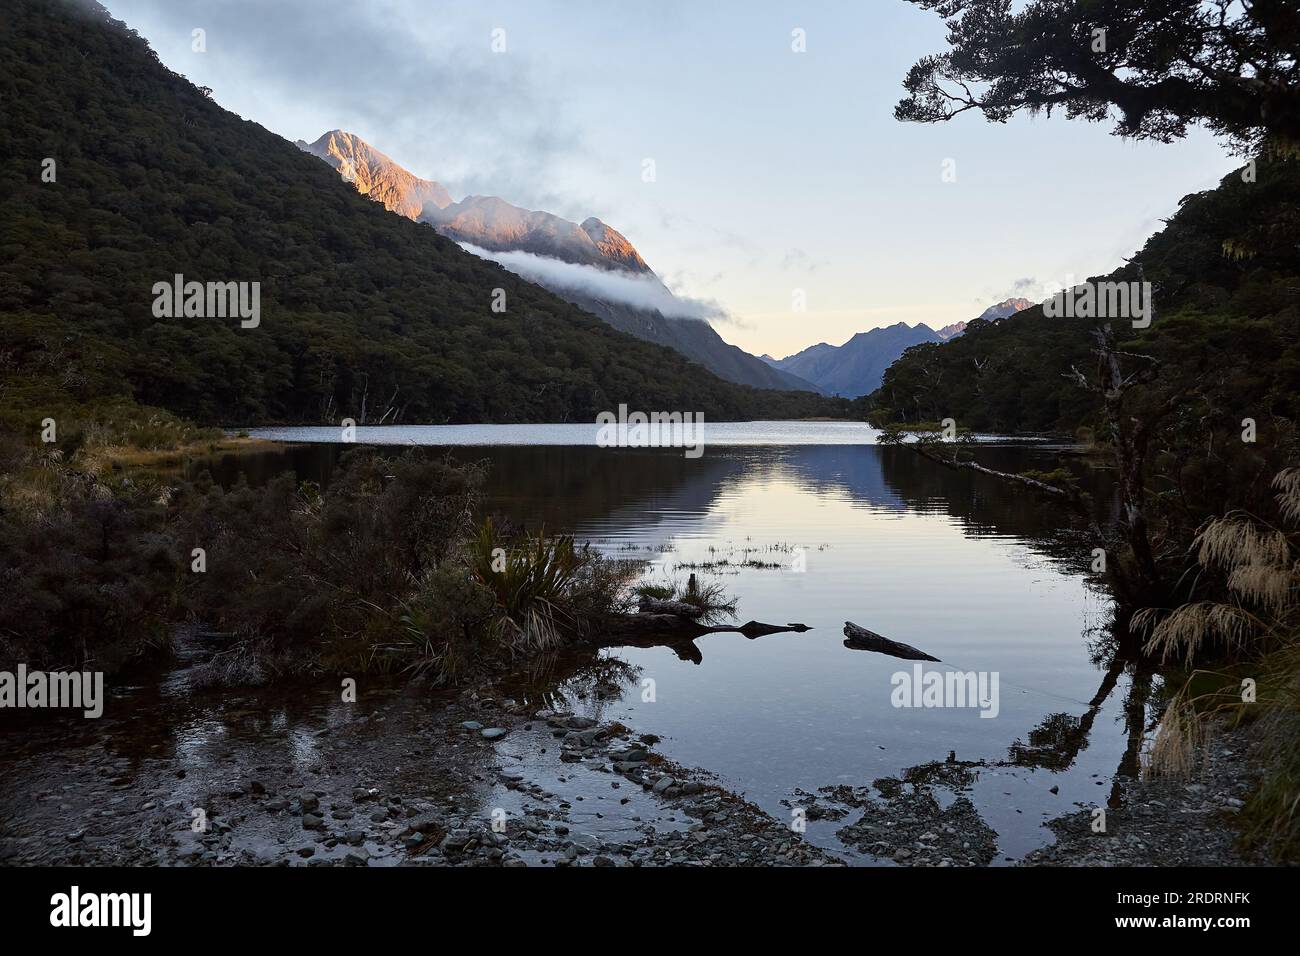 Landschaftlich reizvolle Berglandschaft am See in Neuseeland Stockfoto